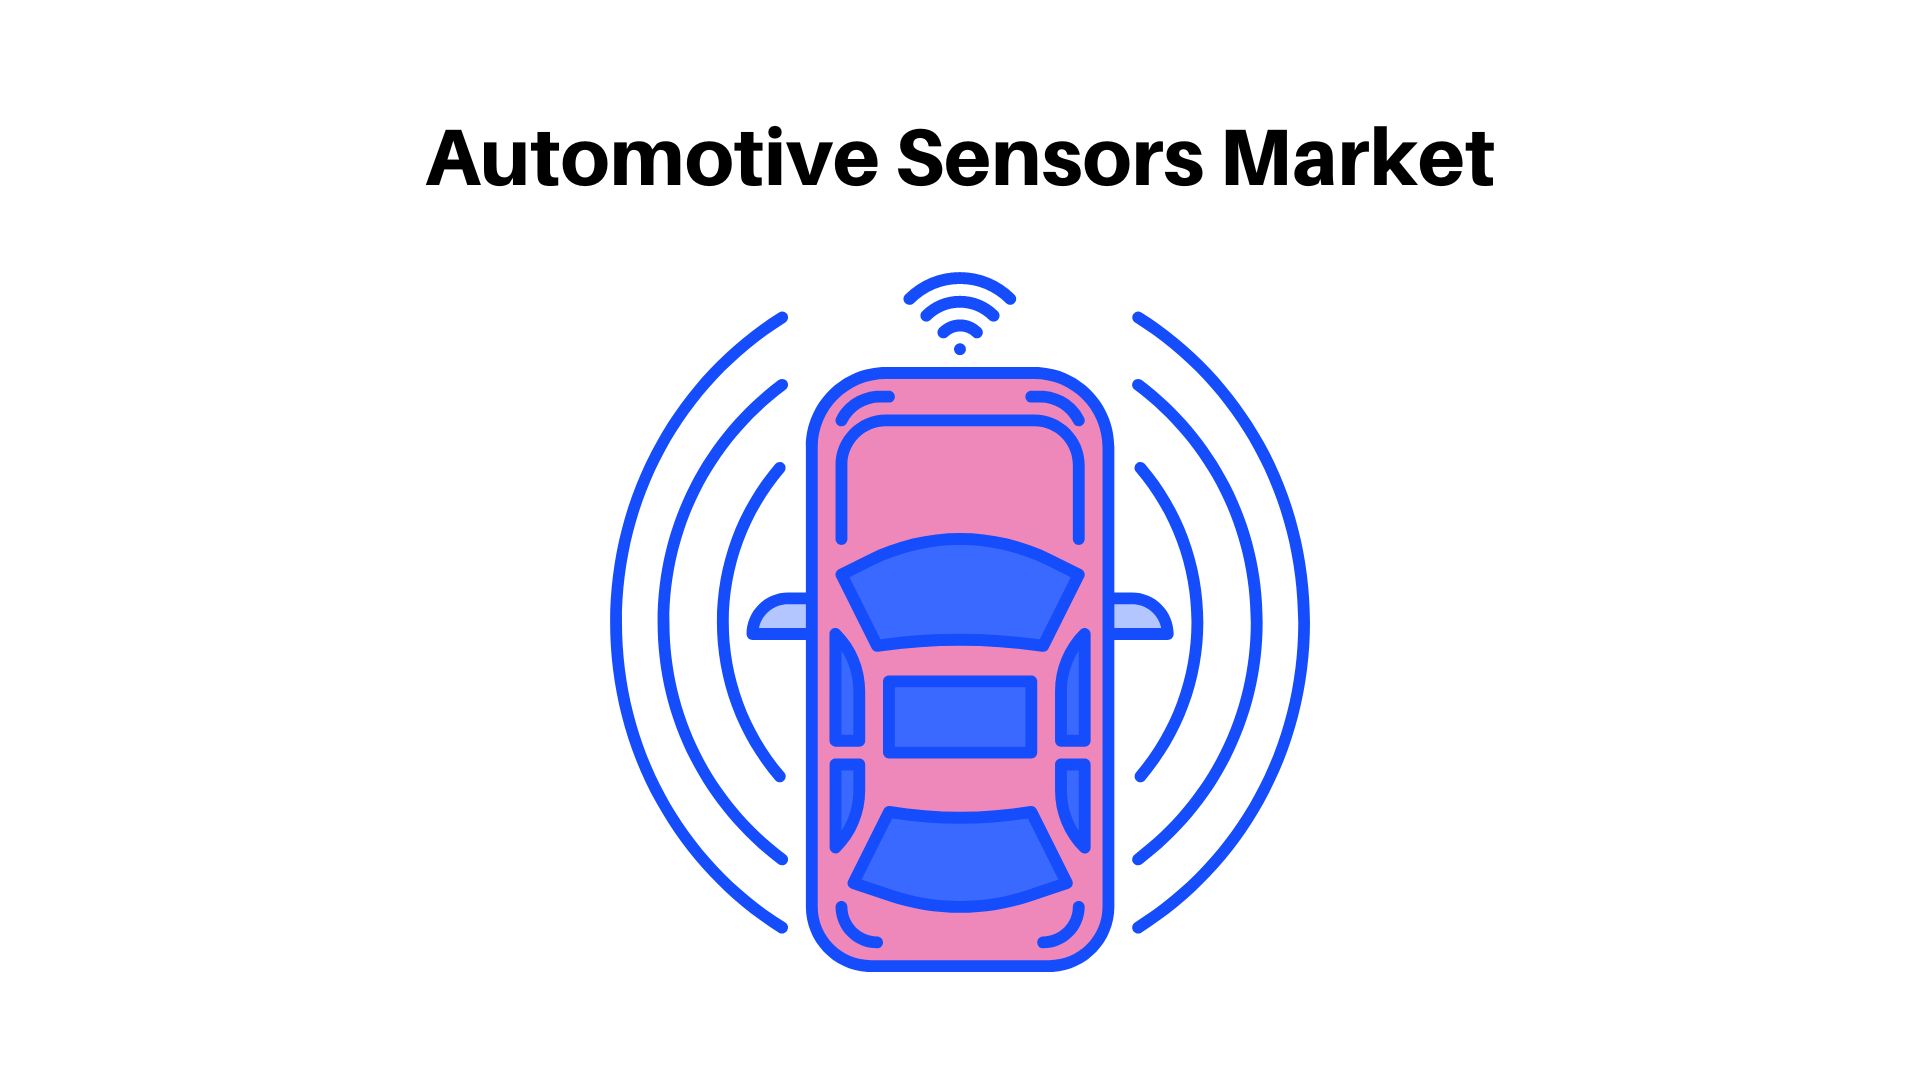 10.10% CAGR of Automotive Sensors Market to Reach USD 56.01 billion by 2032